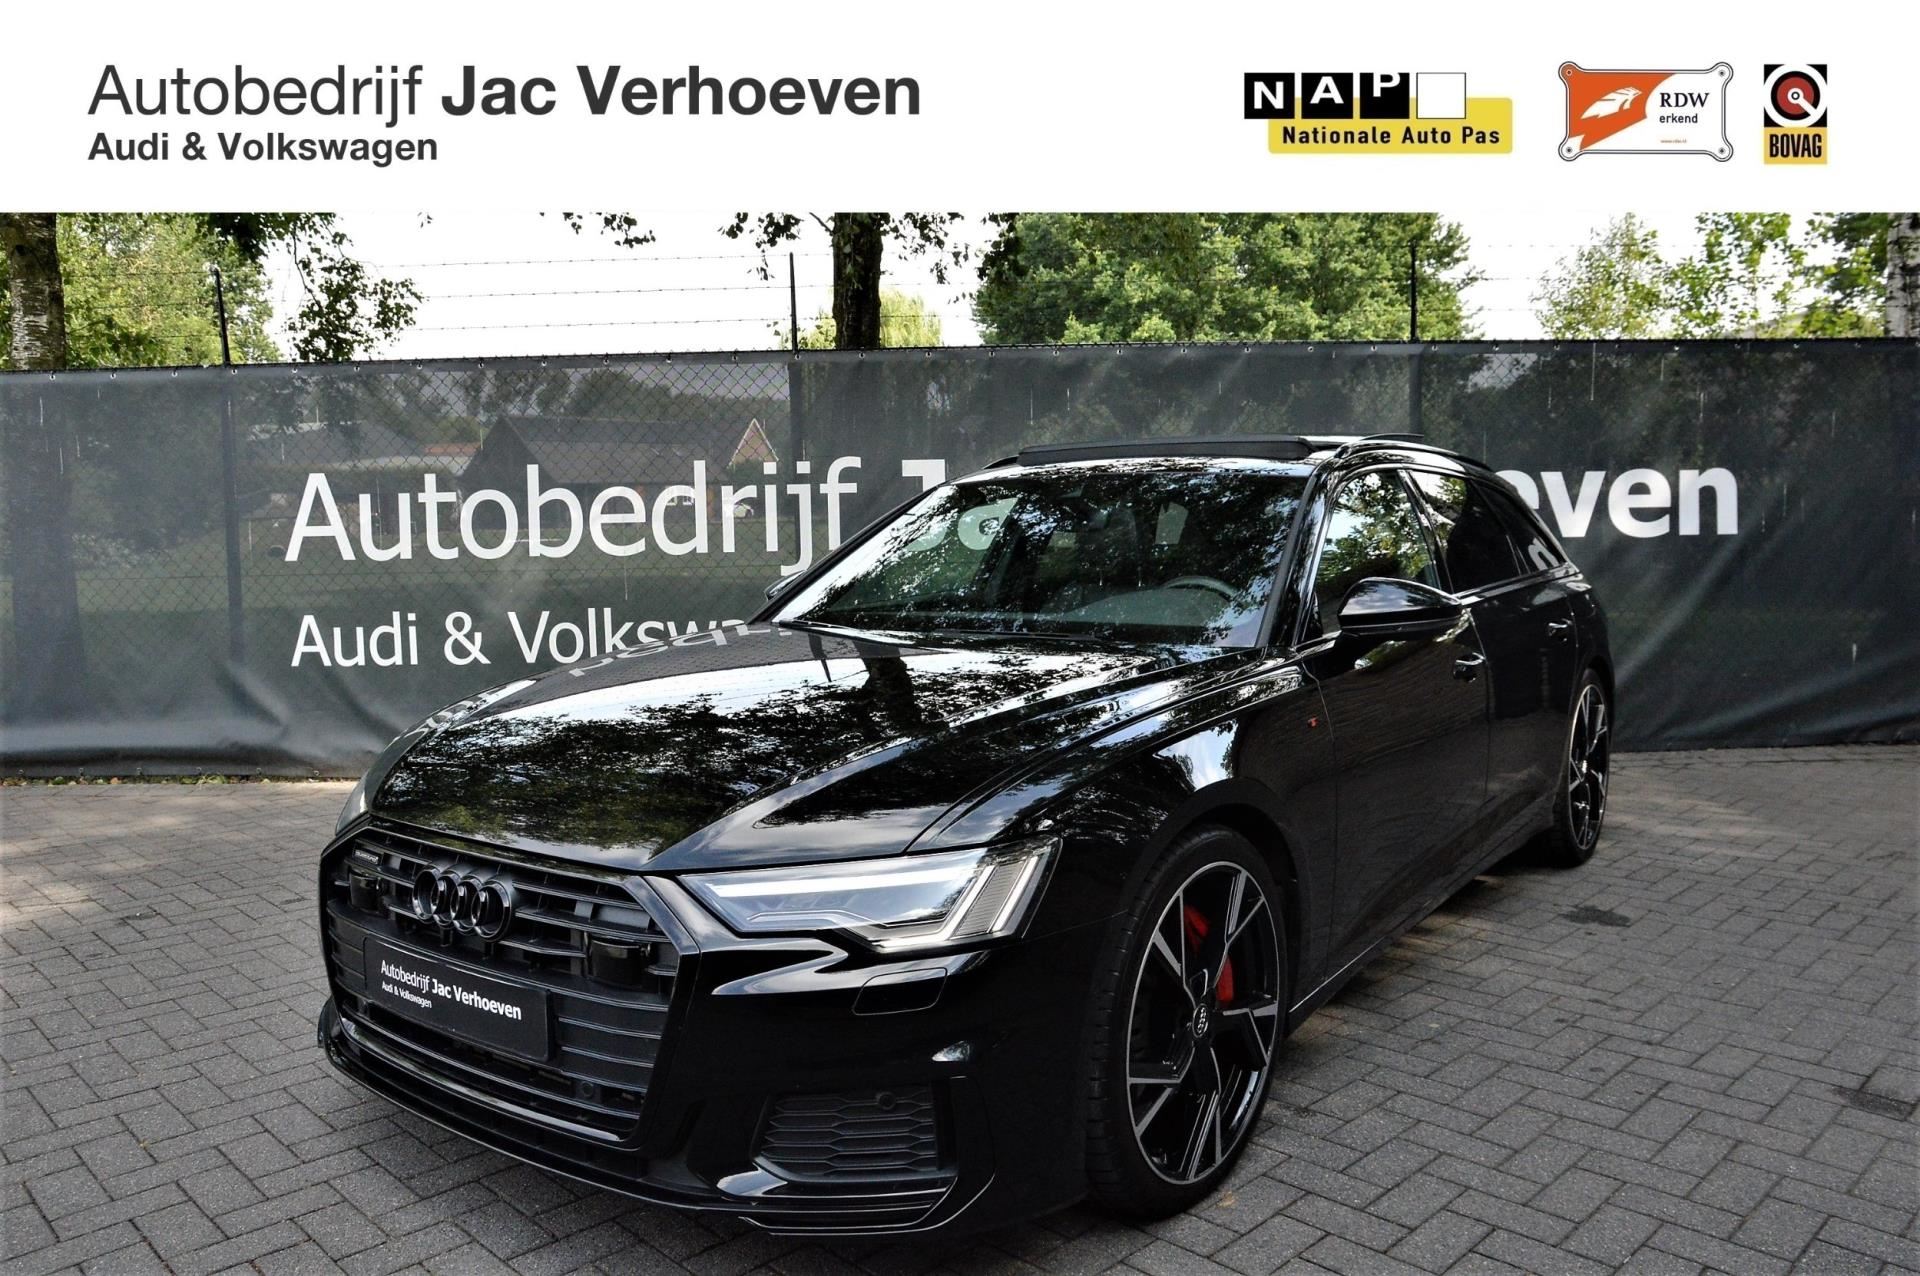 Audi A6 Avant occasion - Autobedrijf Jac Verhoeven